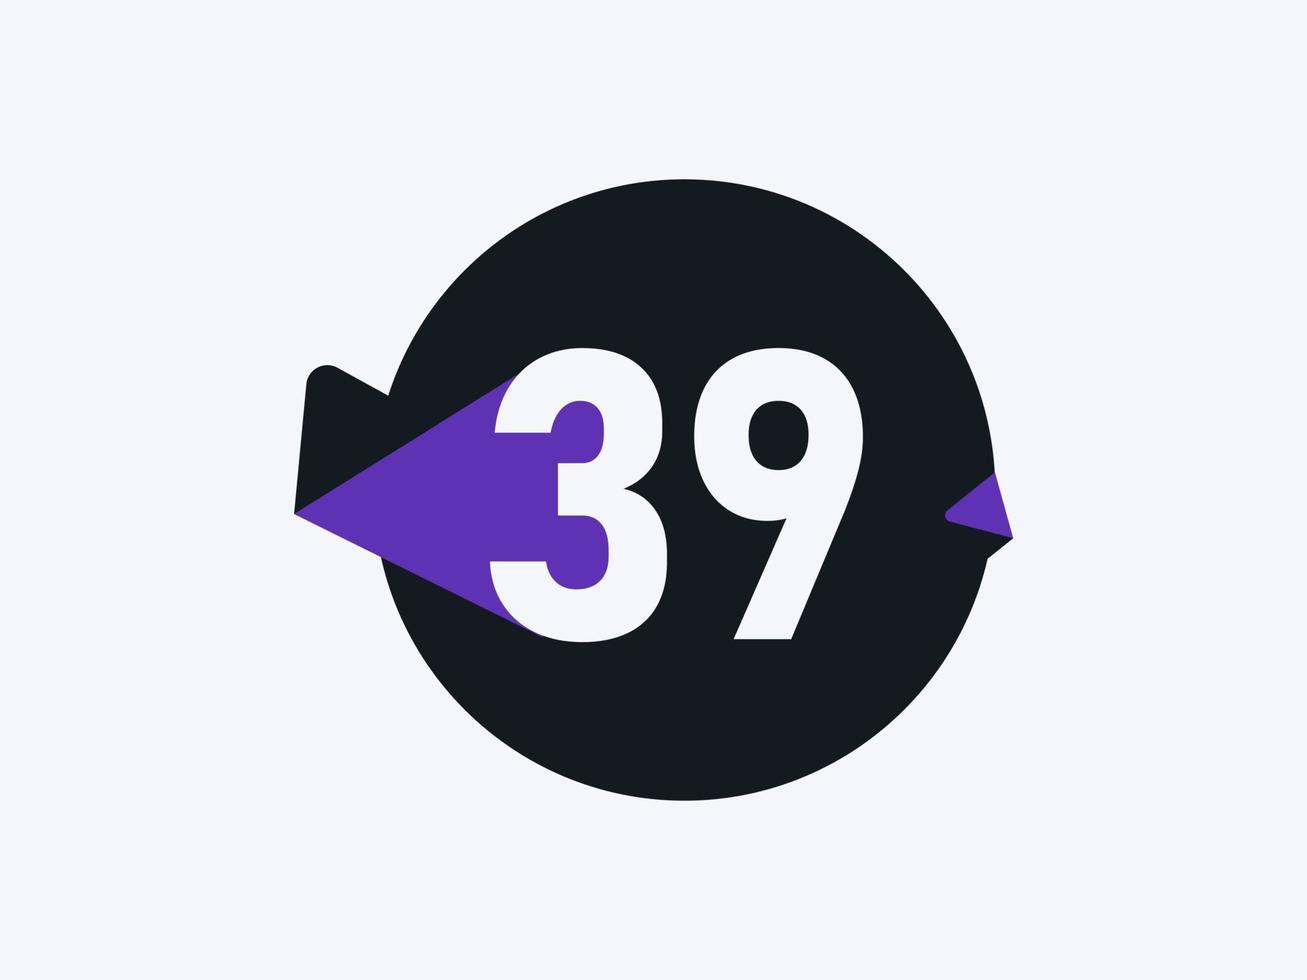 39 Number logo icon design vector image. Number logo icon design vector image